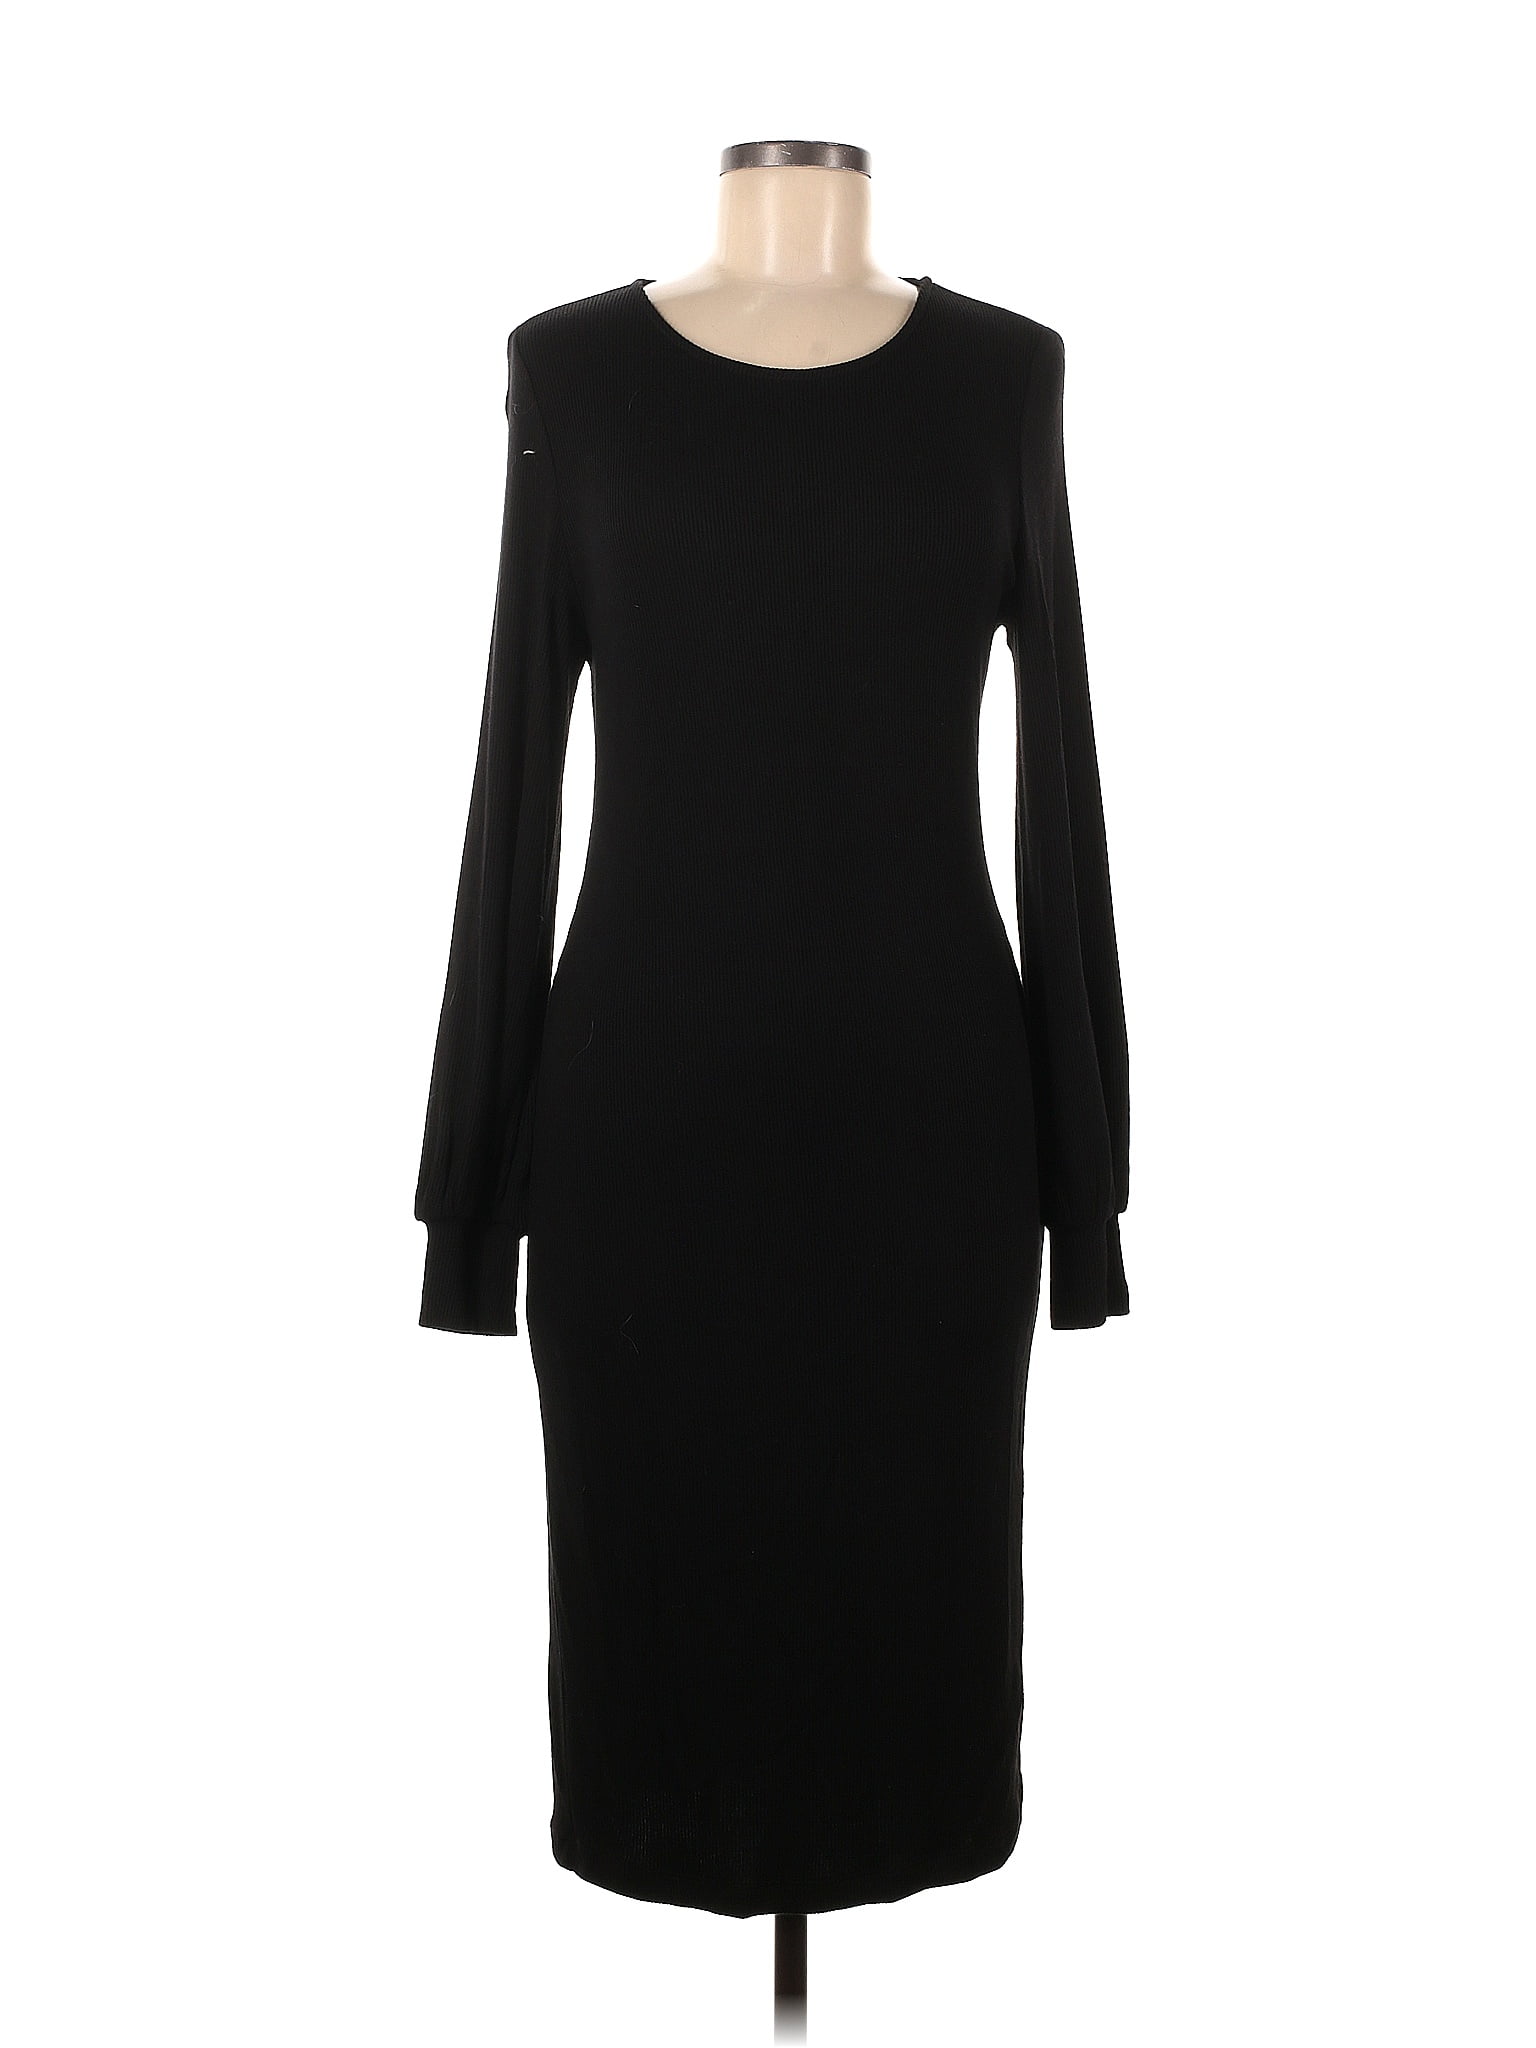 Catherine Malandrino Solid Black Casual Dress Size M - 76% off | ThredUp